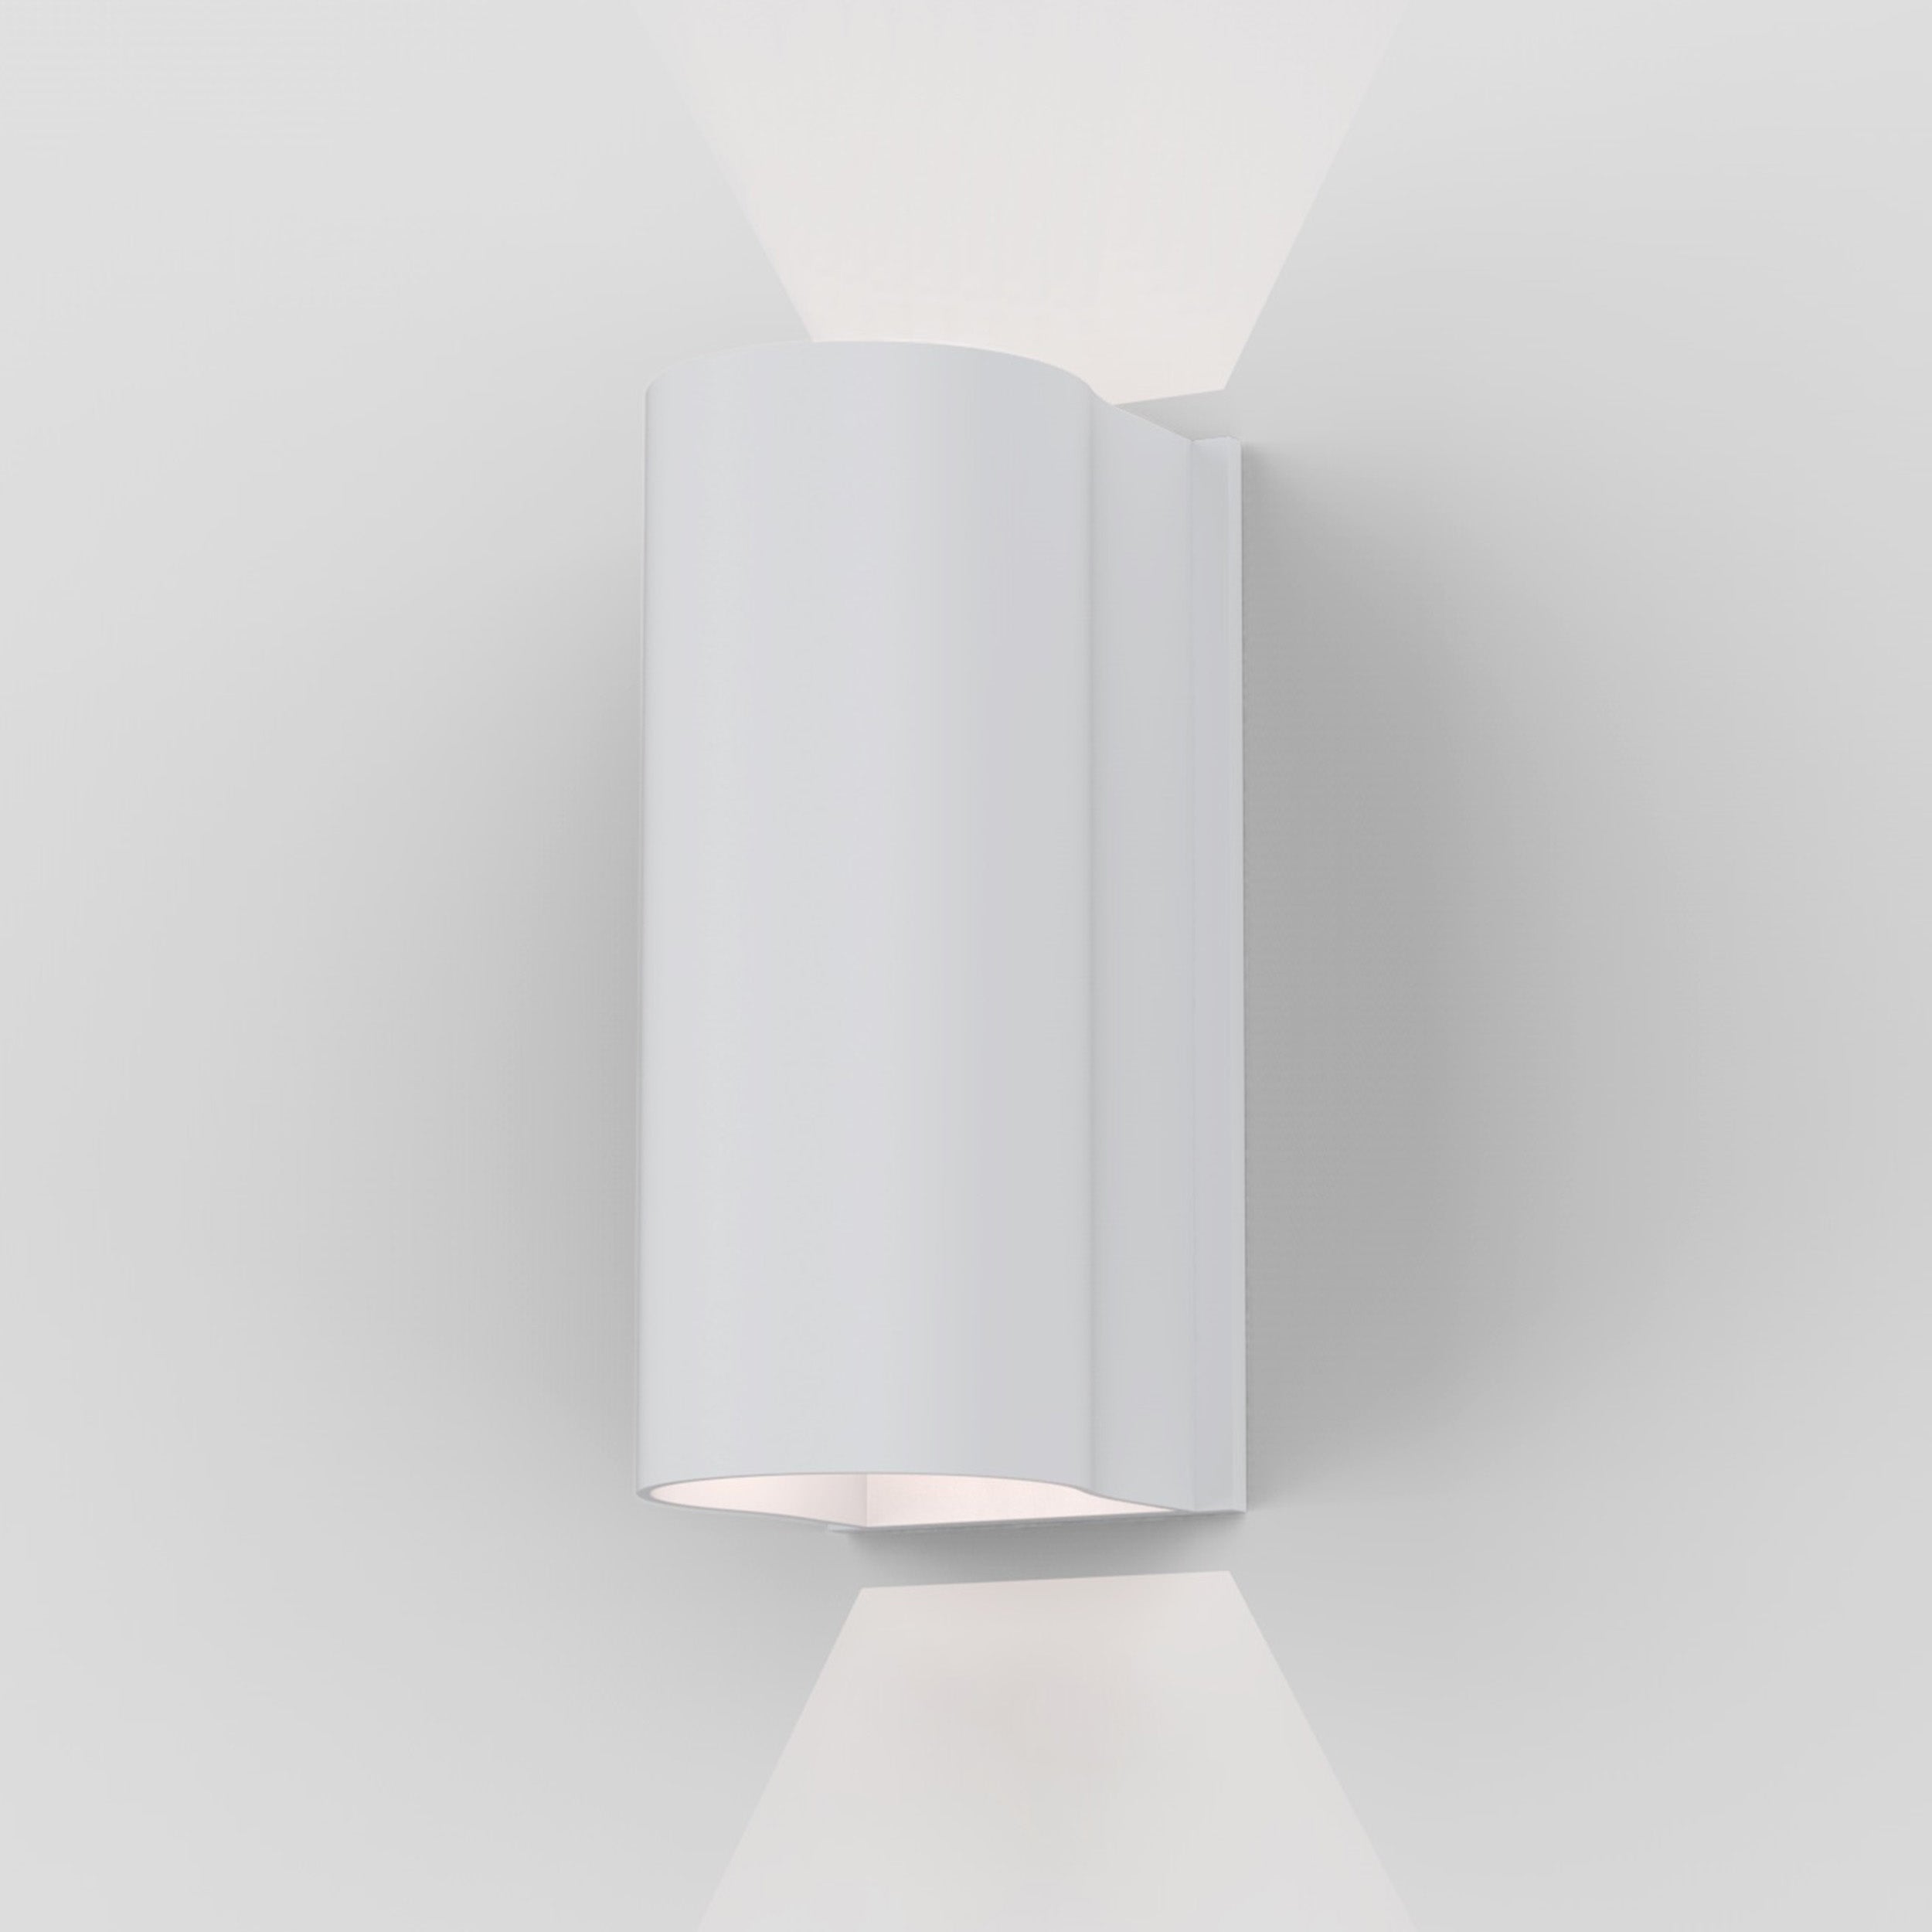 Astro Lighting Dunbar Wall Light Fixtures Astro Lighting 5.16x4.33x10.04 Textured White Yes (Integral), COB LED